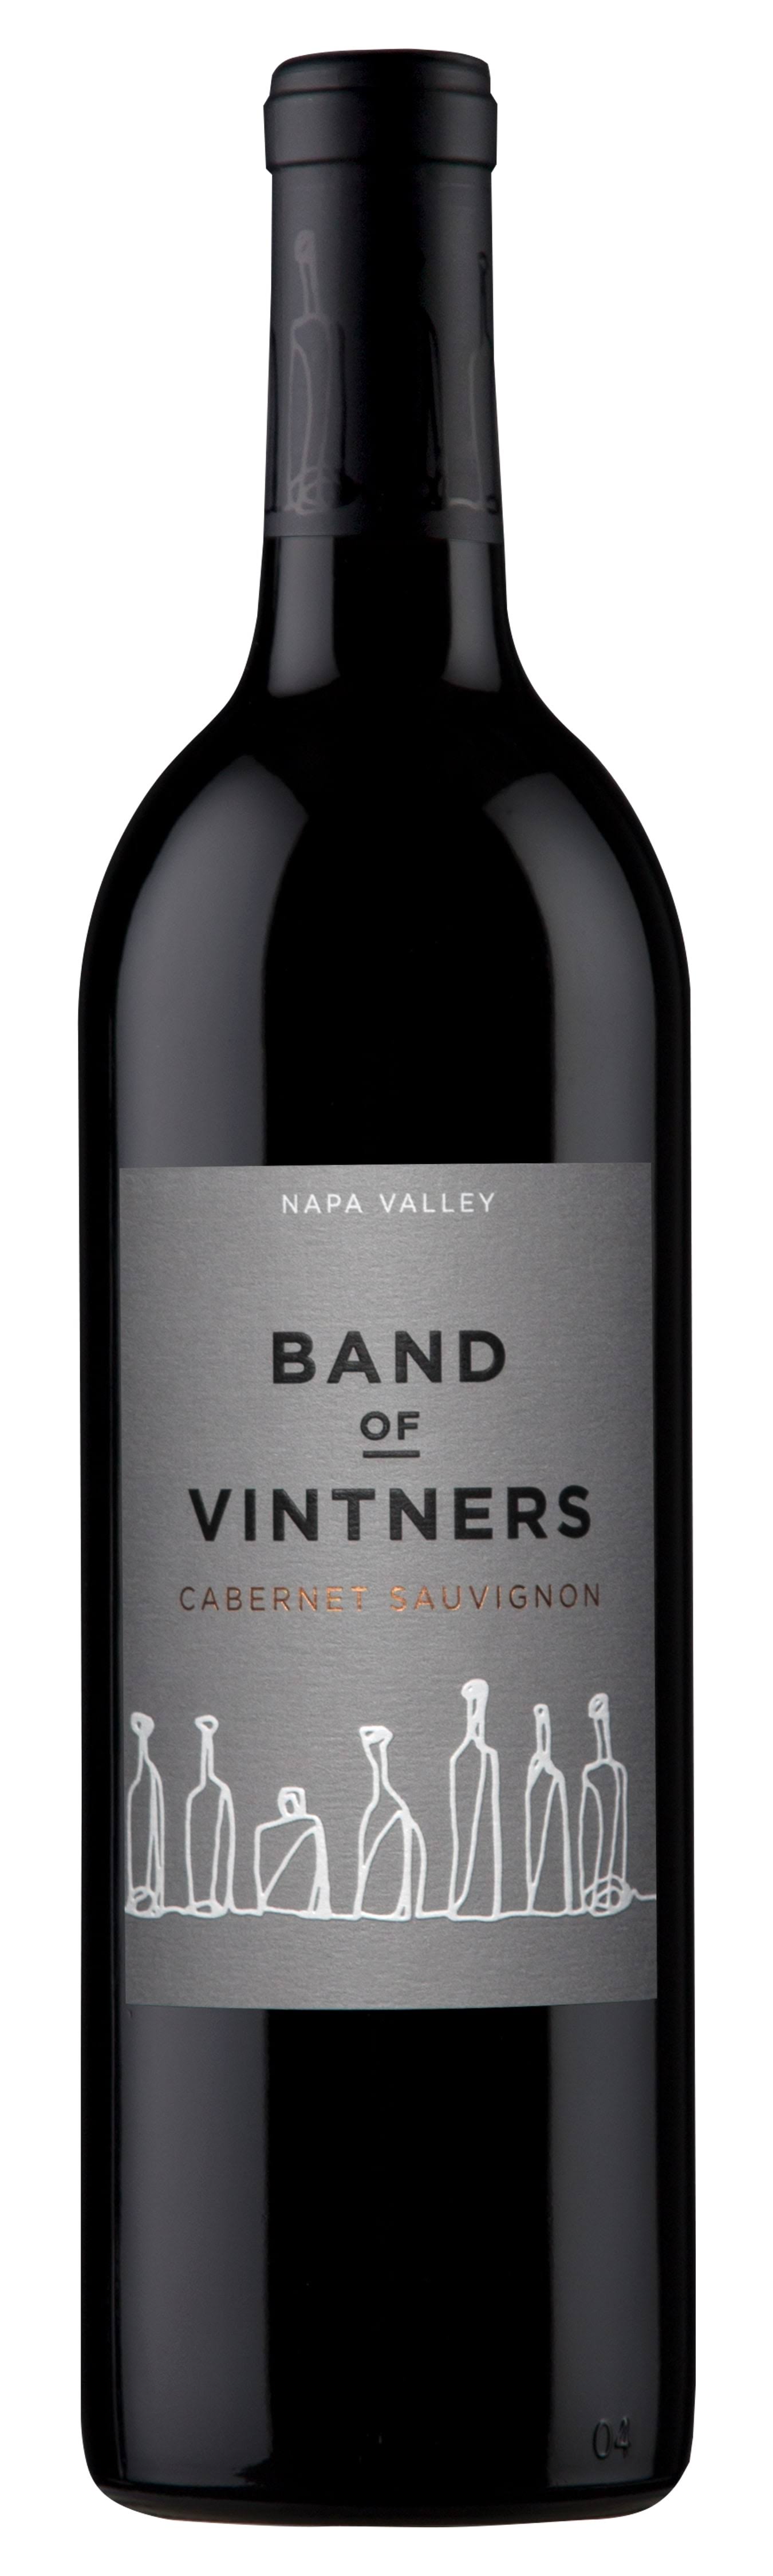 Band of Vintners Consortium Cabernet Sauvignon 2016